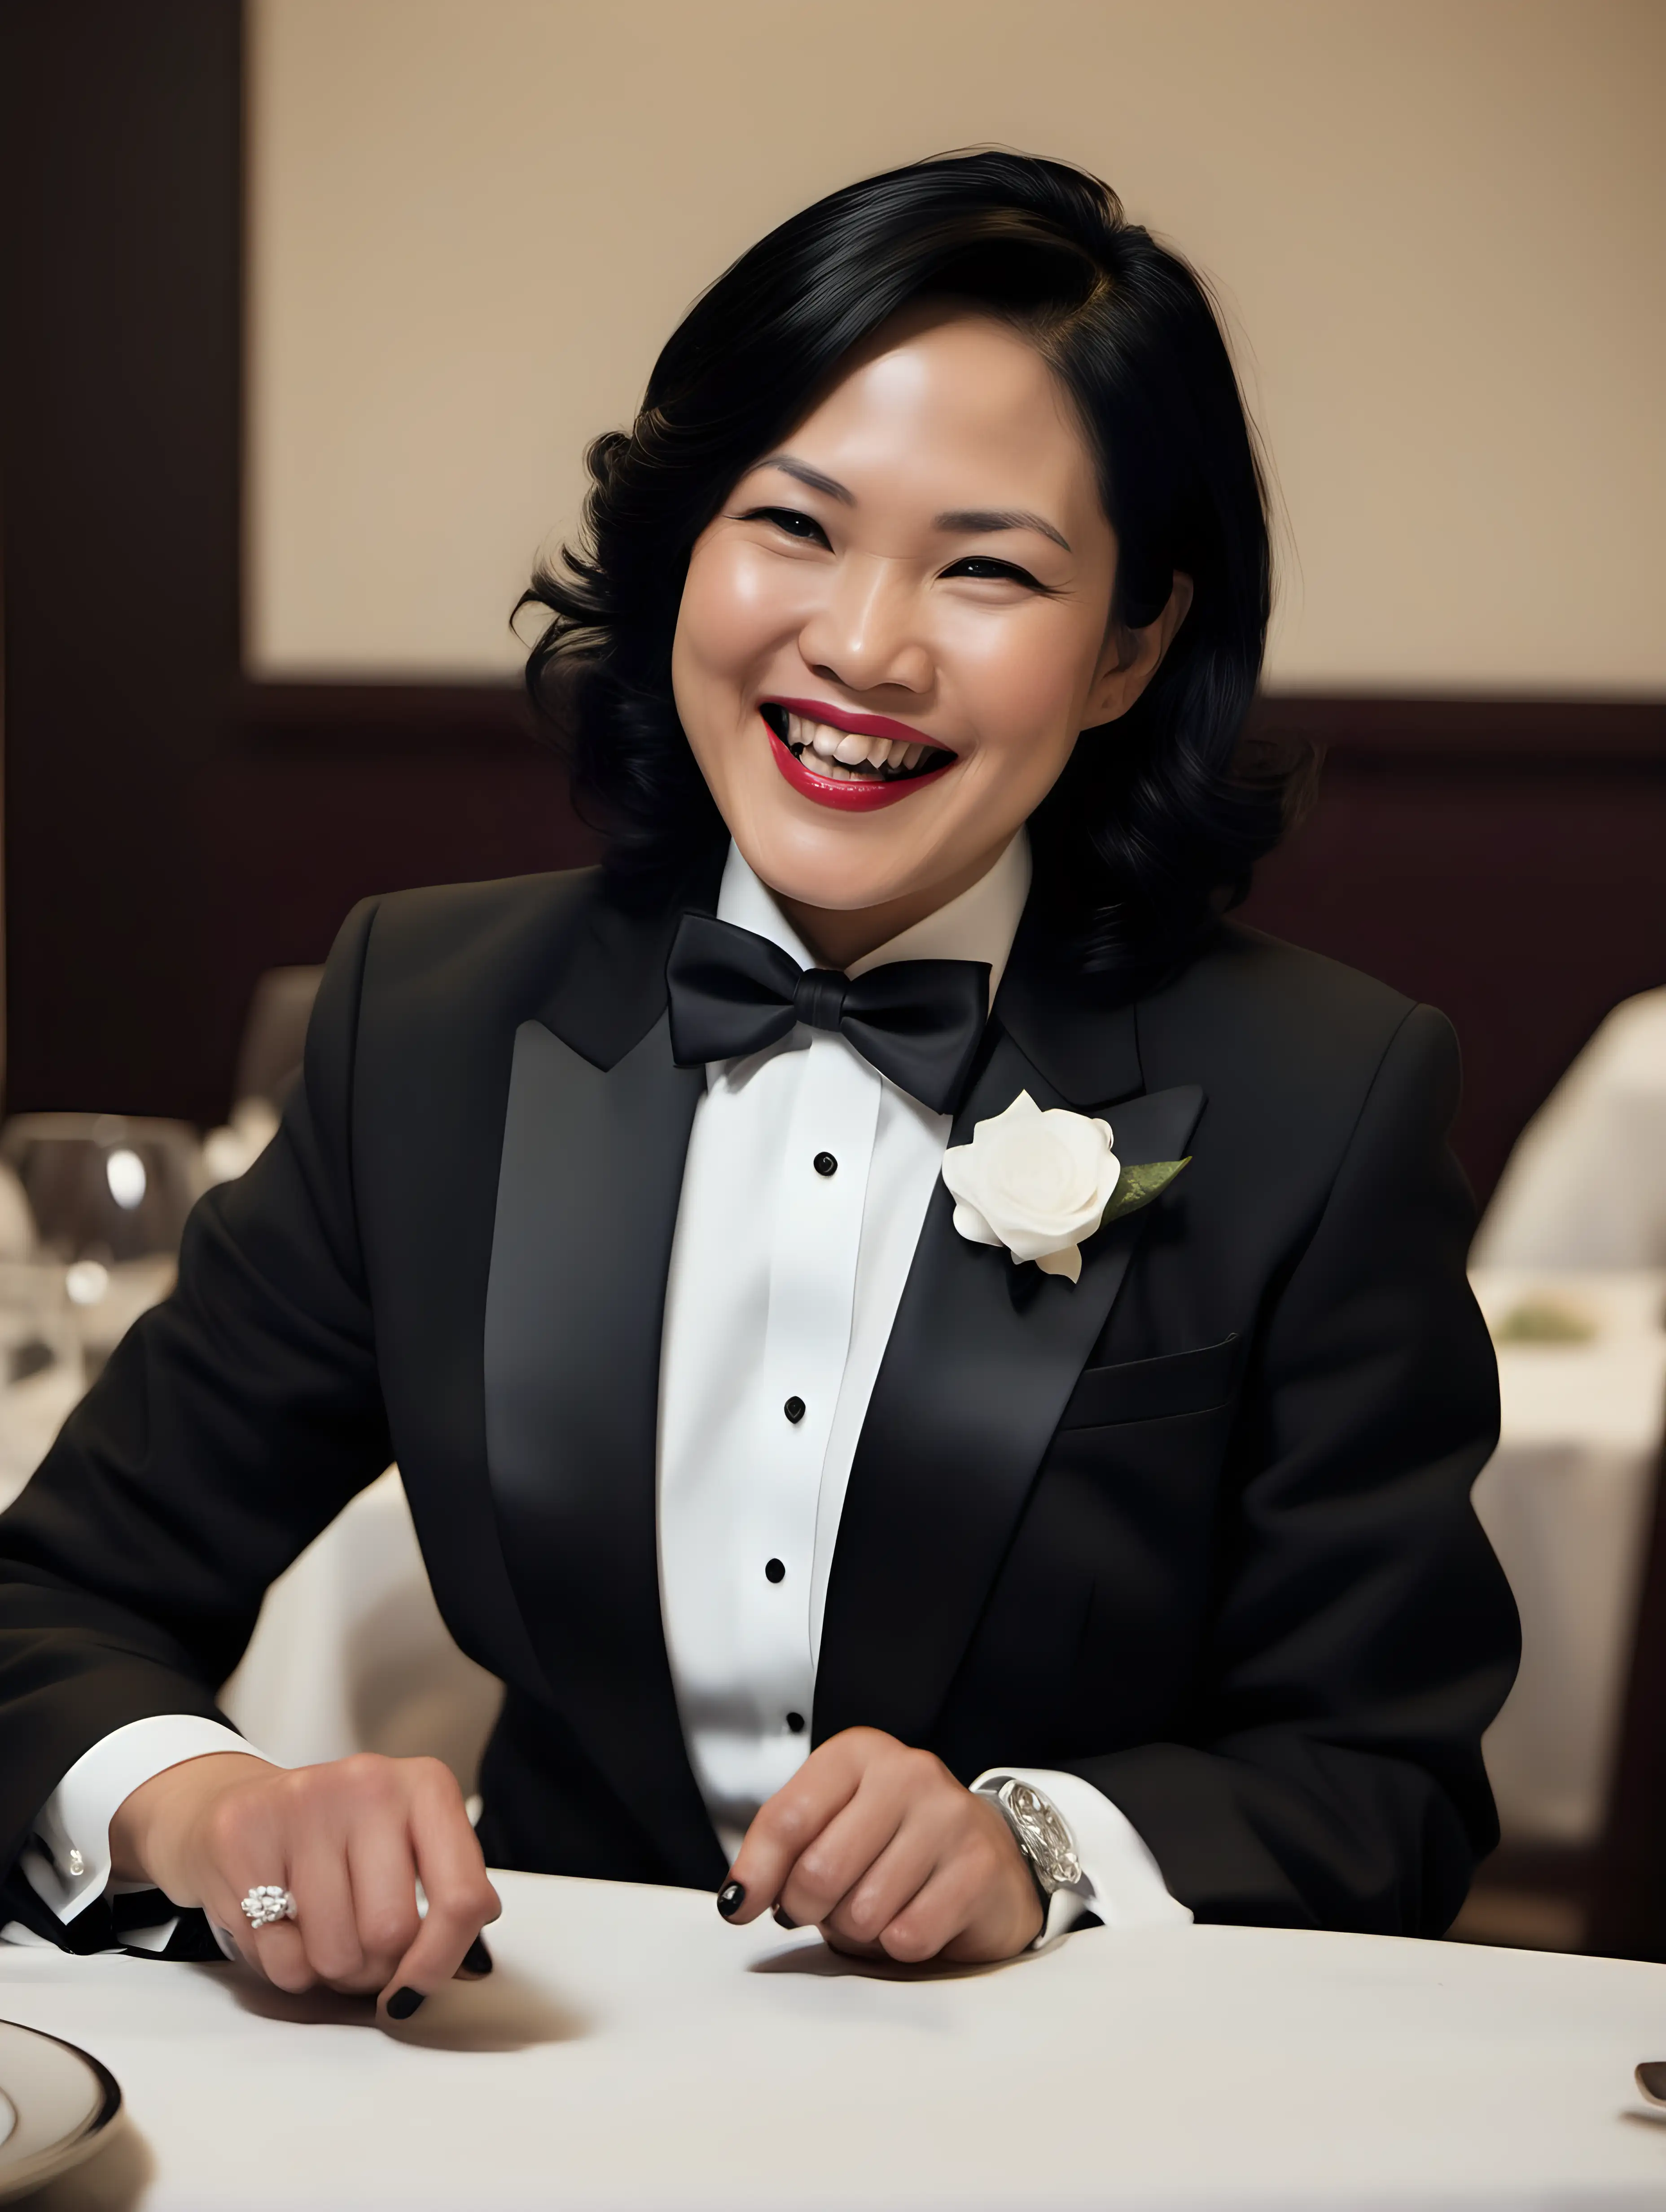 Elegant-Vietnamese-Woman-Laughing-at-Dinner-Table-in-Stylish-Tuxedo